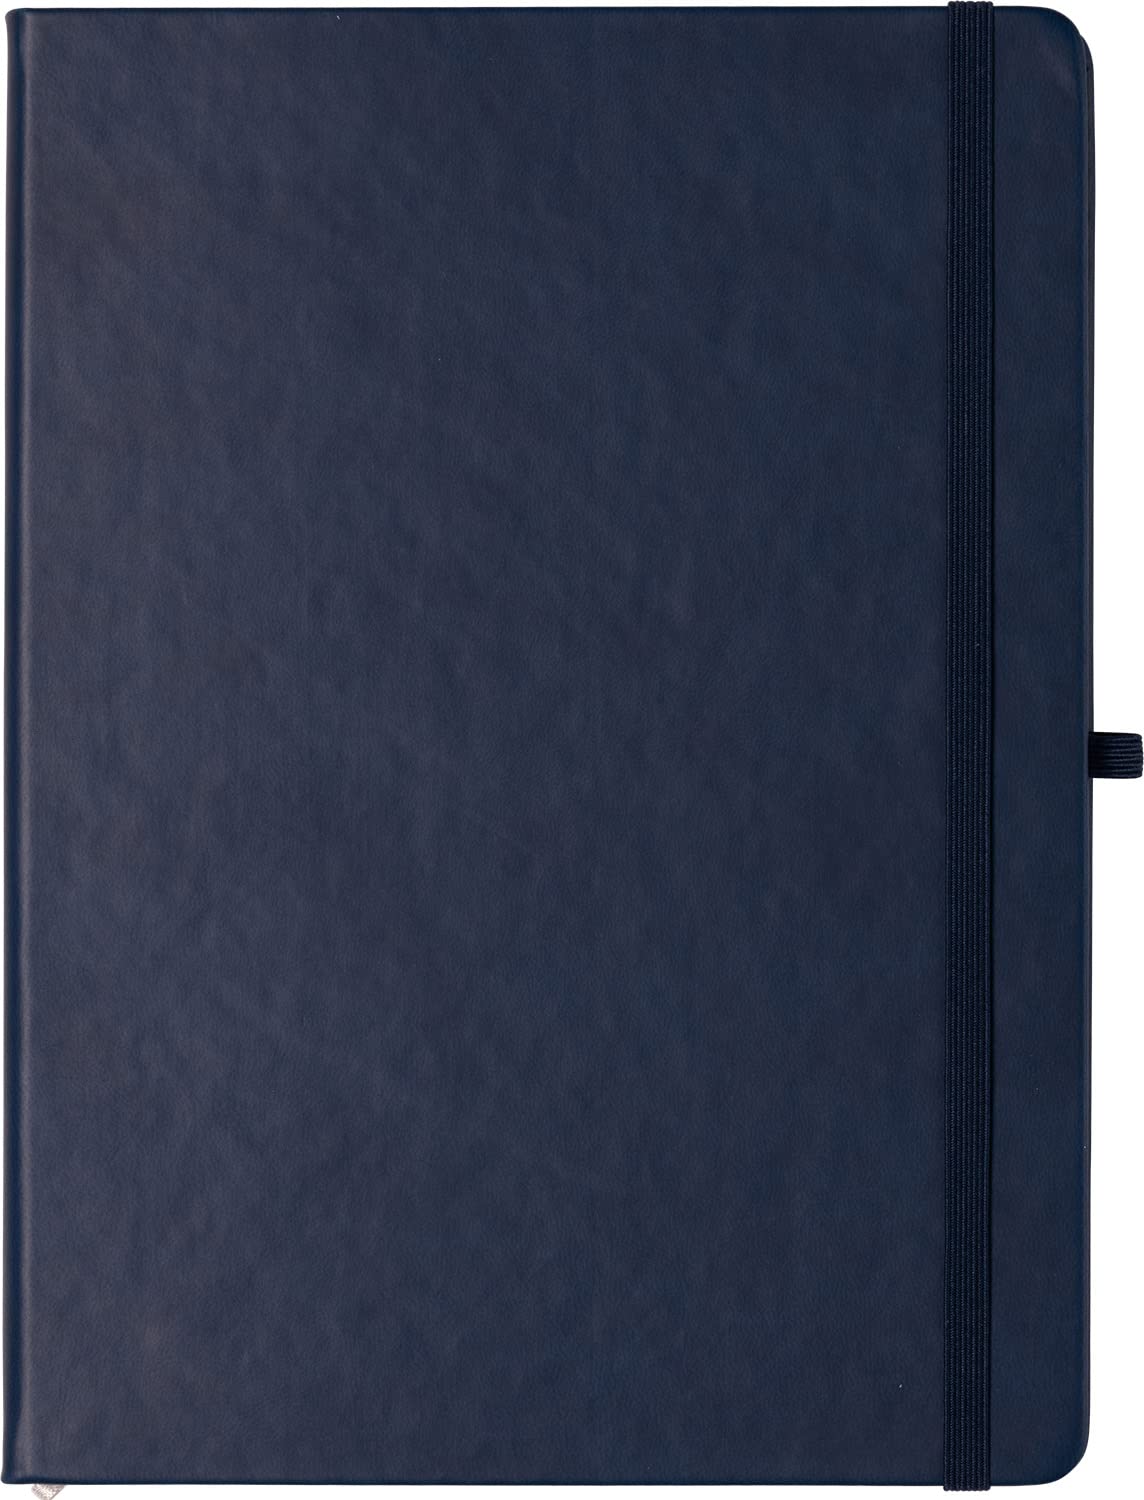 Eccolo Hardbound Writing Journal Navy Blue